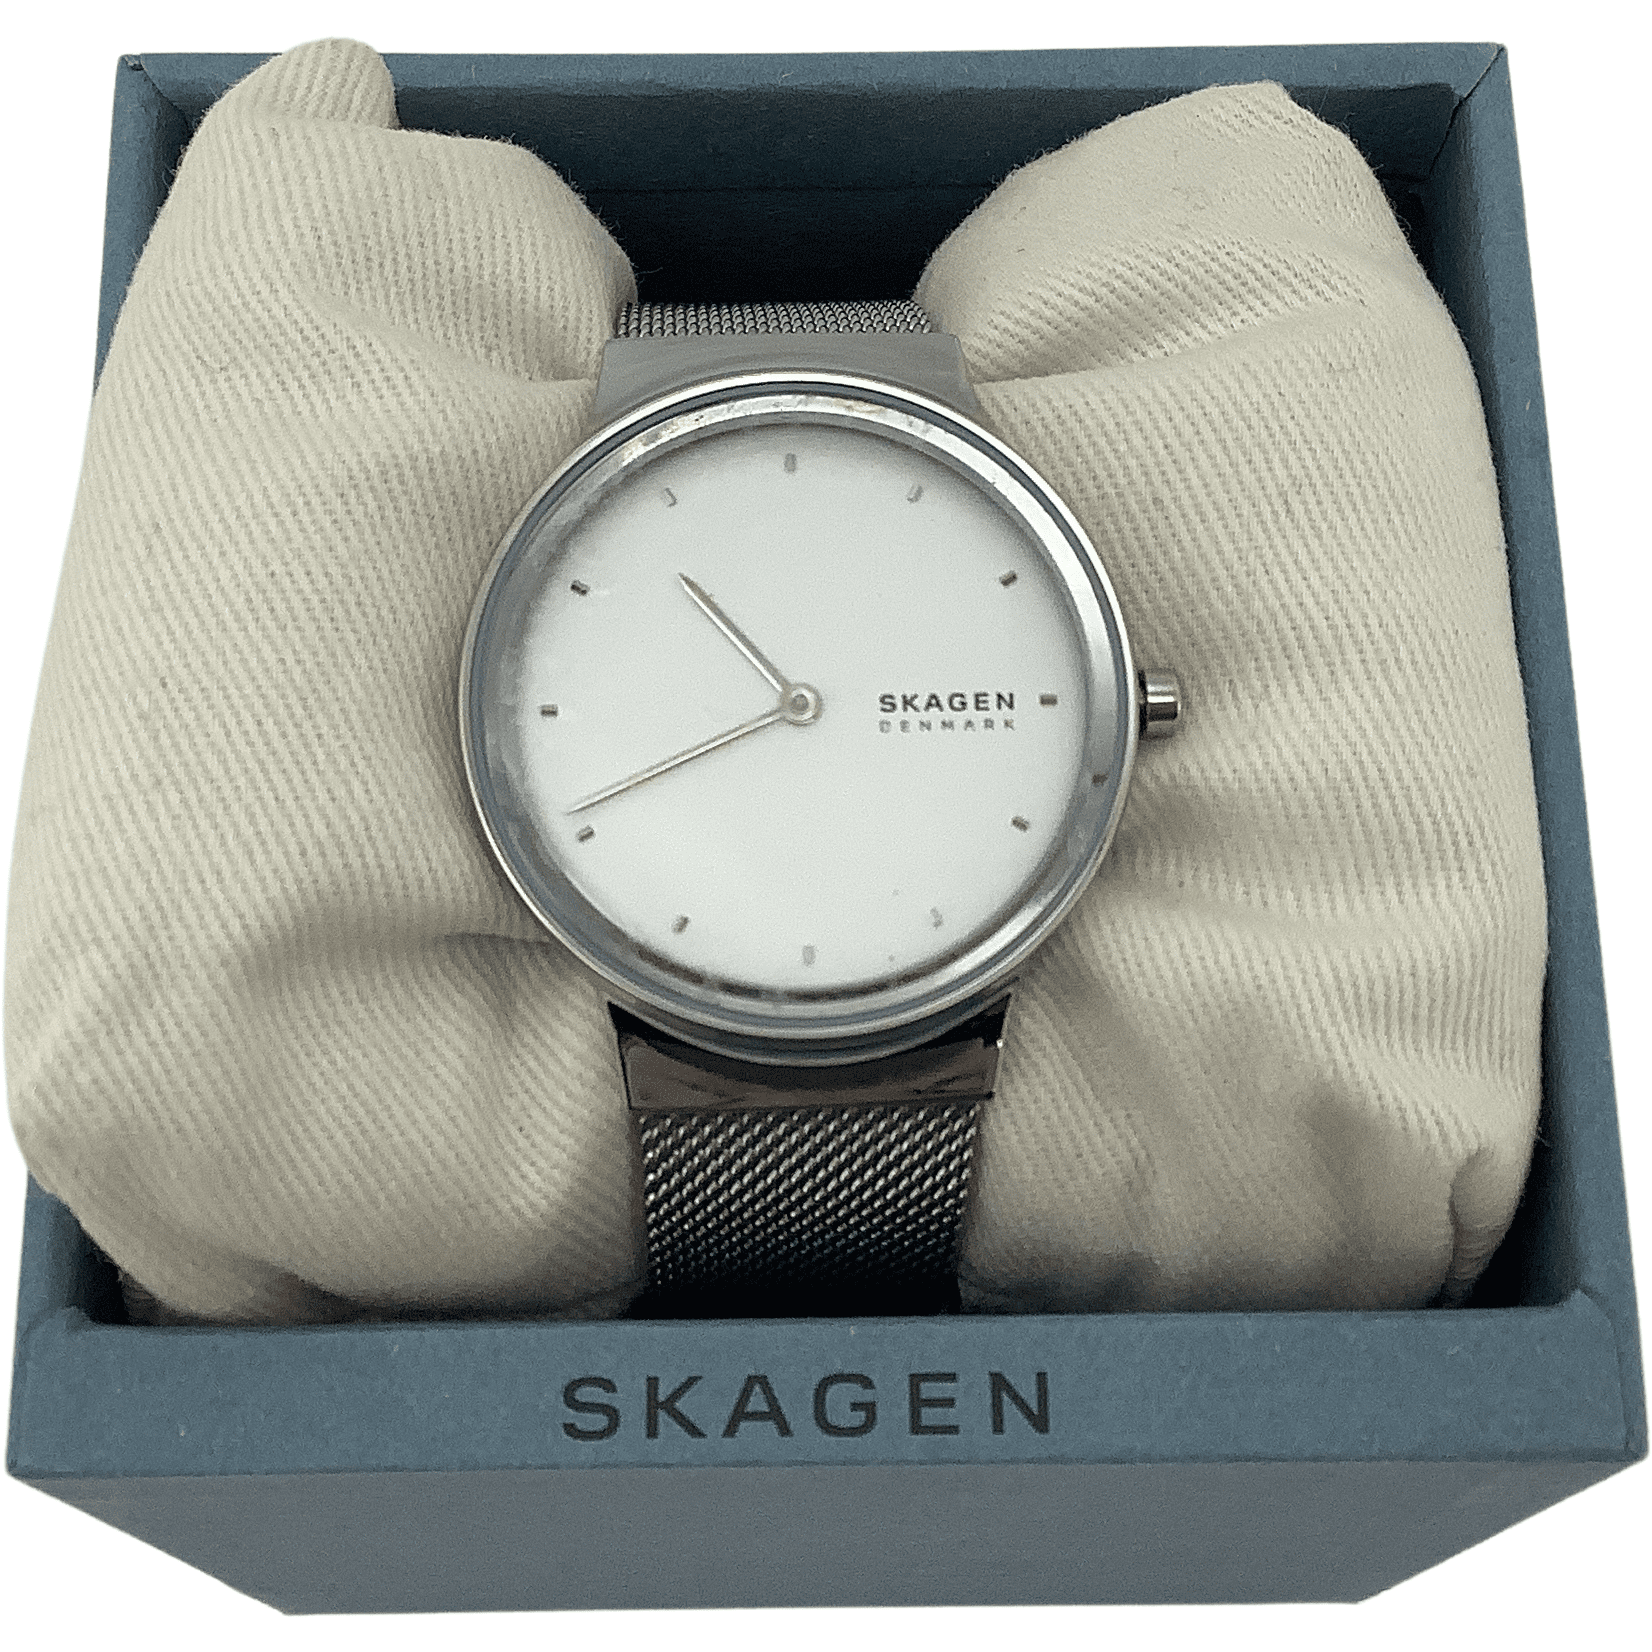 Skagen Women's Analog Wrist Watch / Stainless Steel / Bracelet Band / Women's Accessories